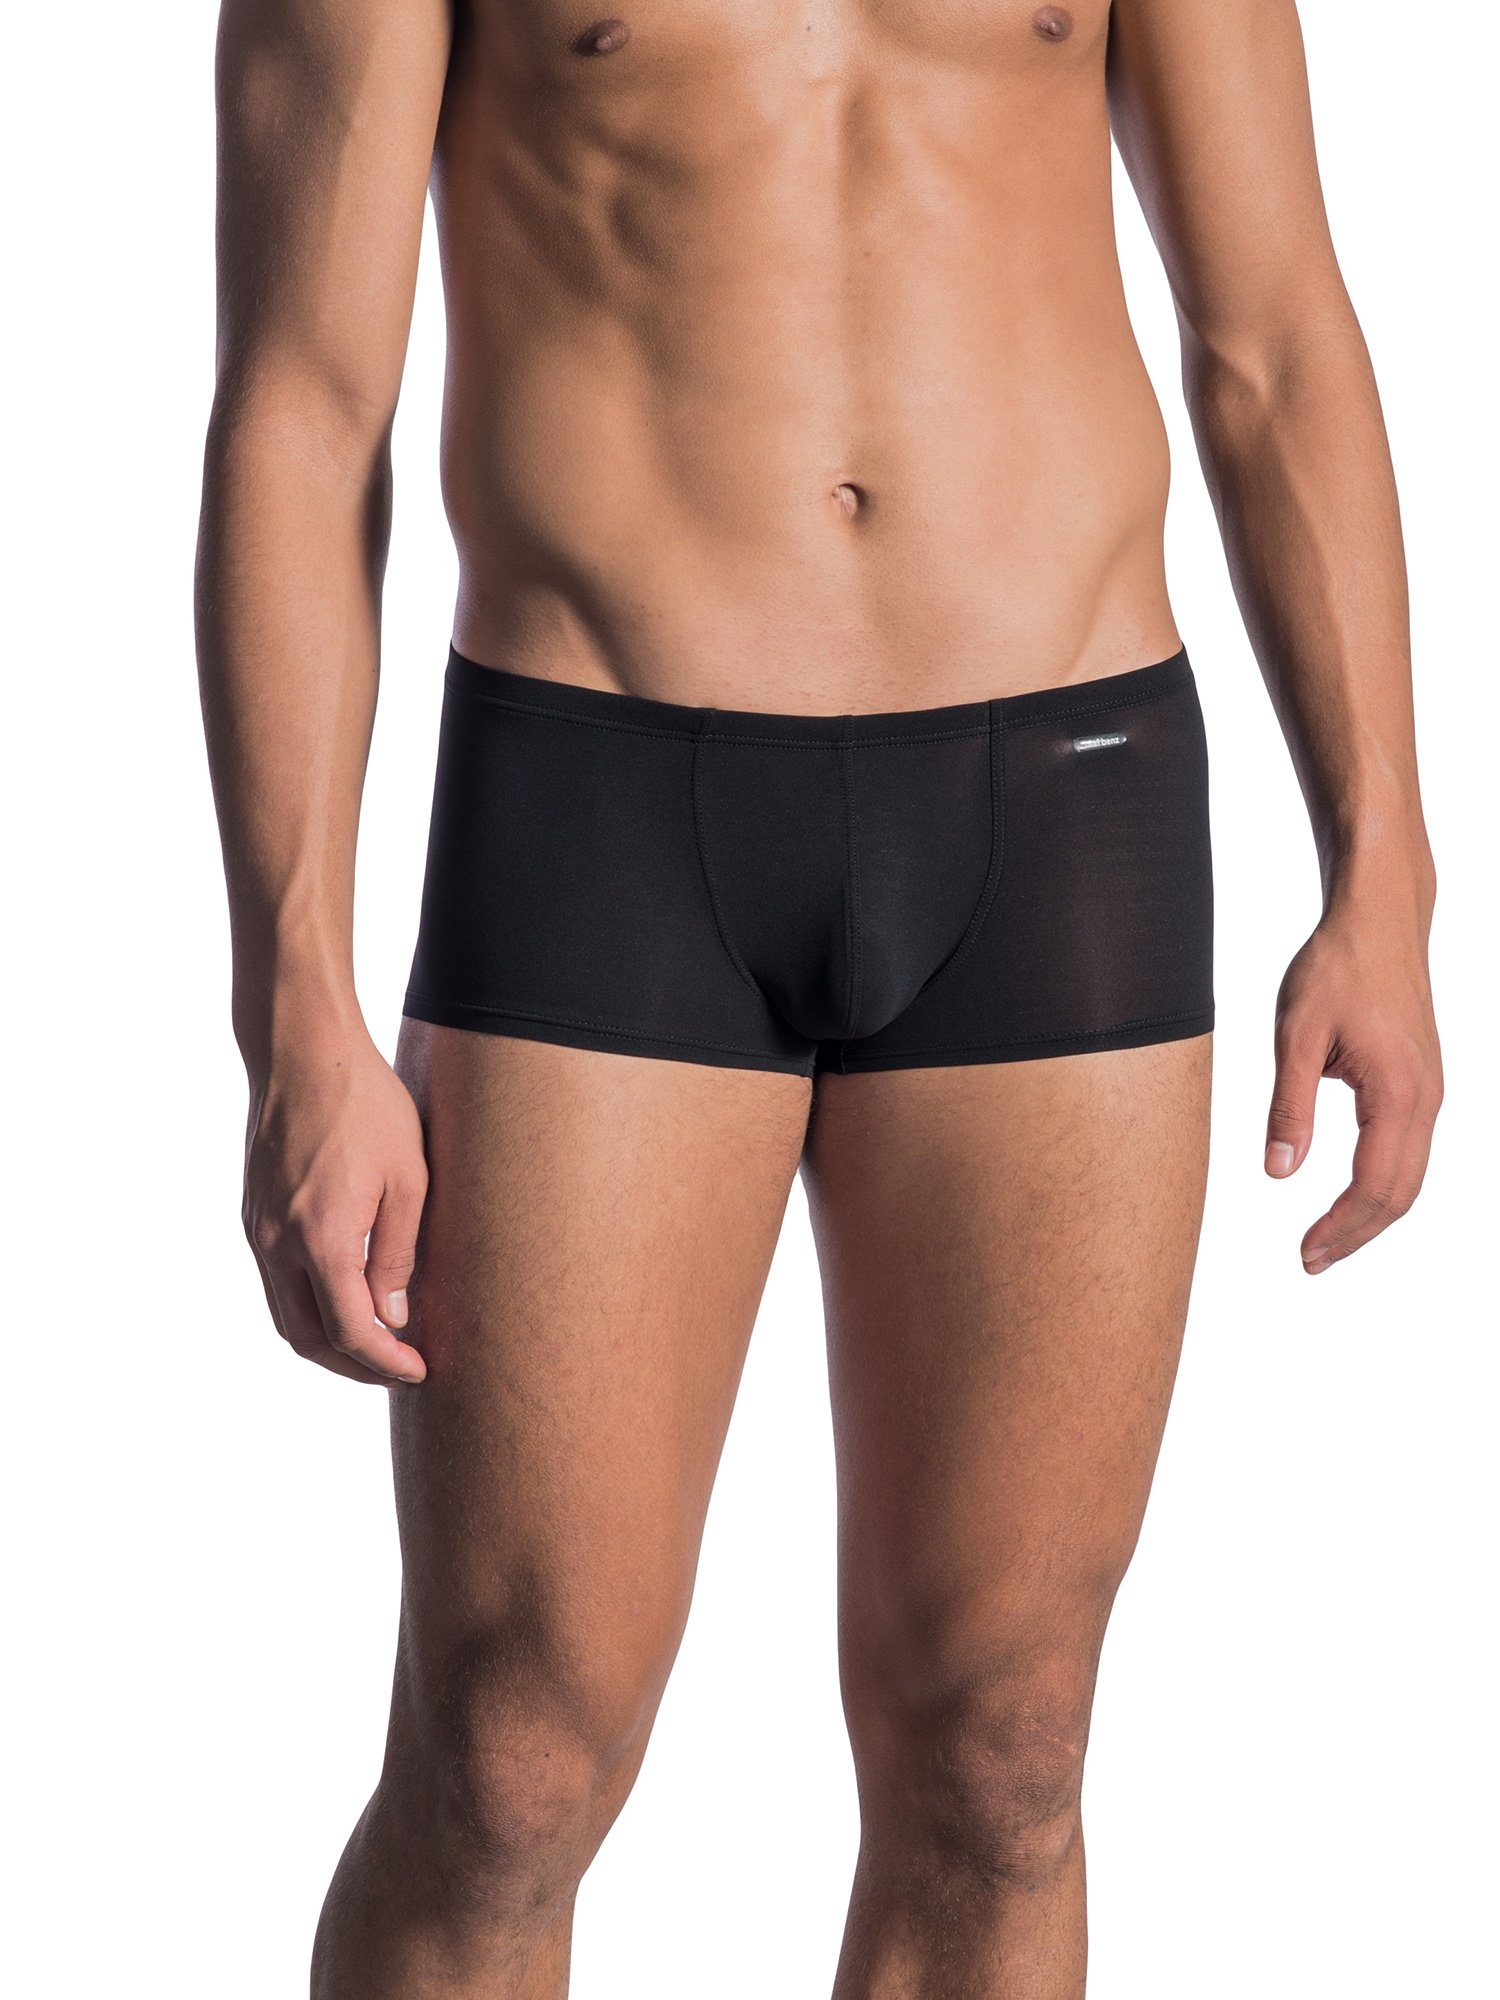 Olaf Benz Retro unterhose Pants Retro-Boxer Minipants (5-St) RED0965 schwarz Retro-shorts